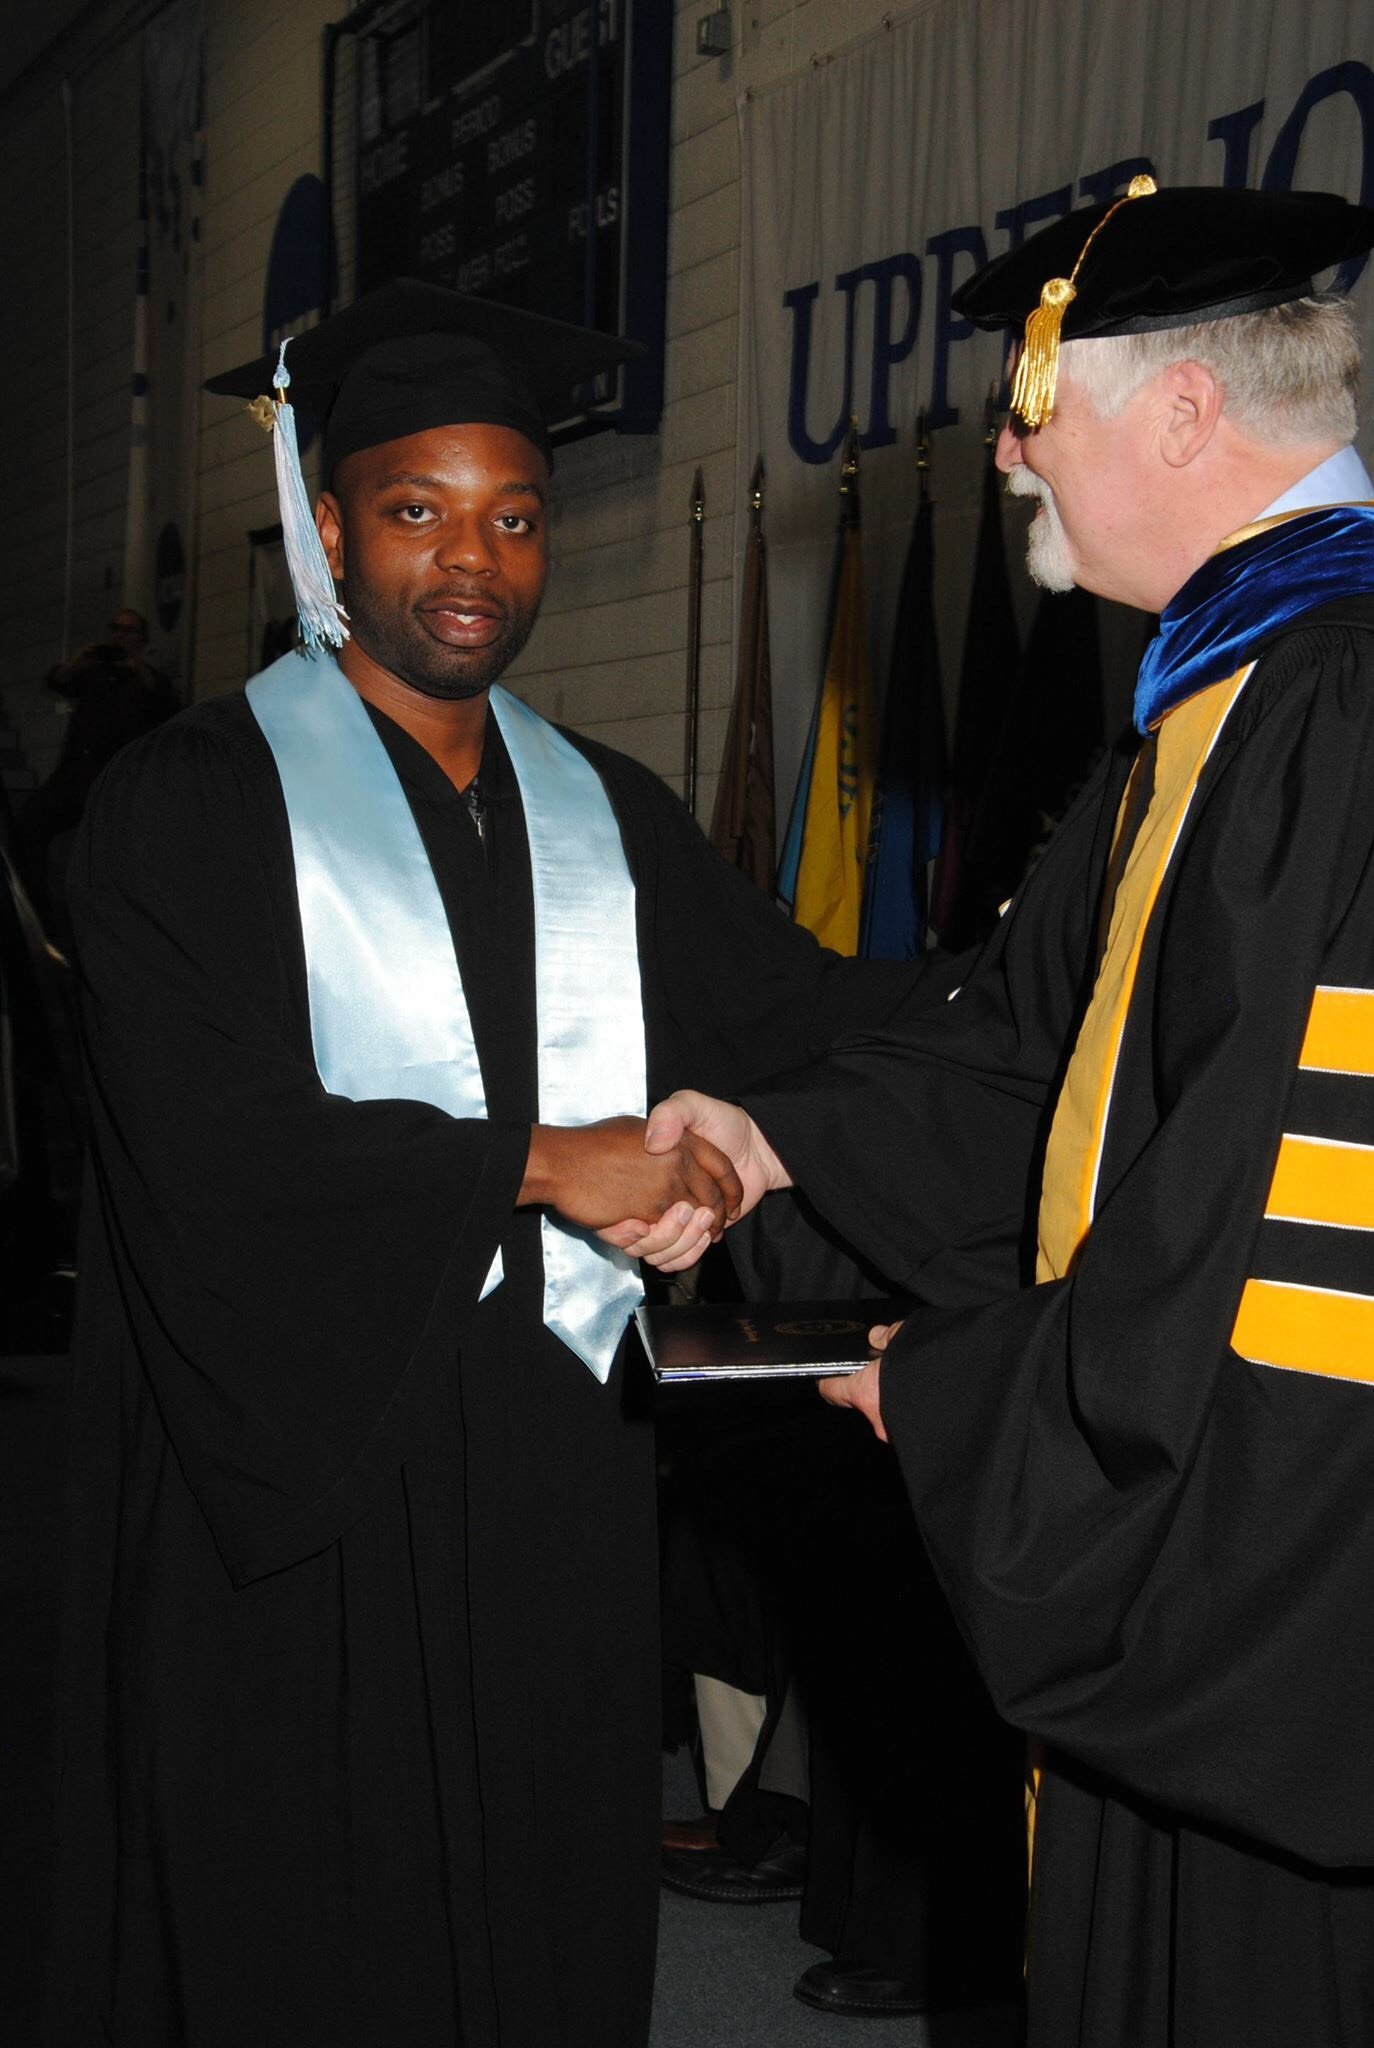 Paul Lamar Hunter during his graduation ceremony at  Upper Lowa University in 2012. | Source: Paul Lamar Hunter